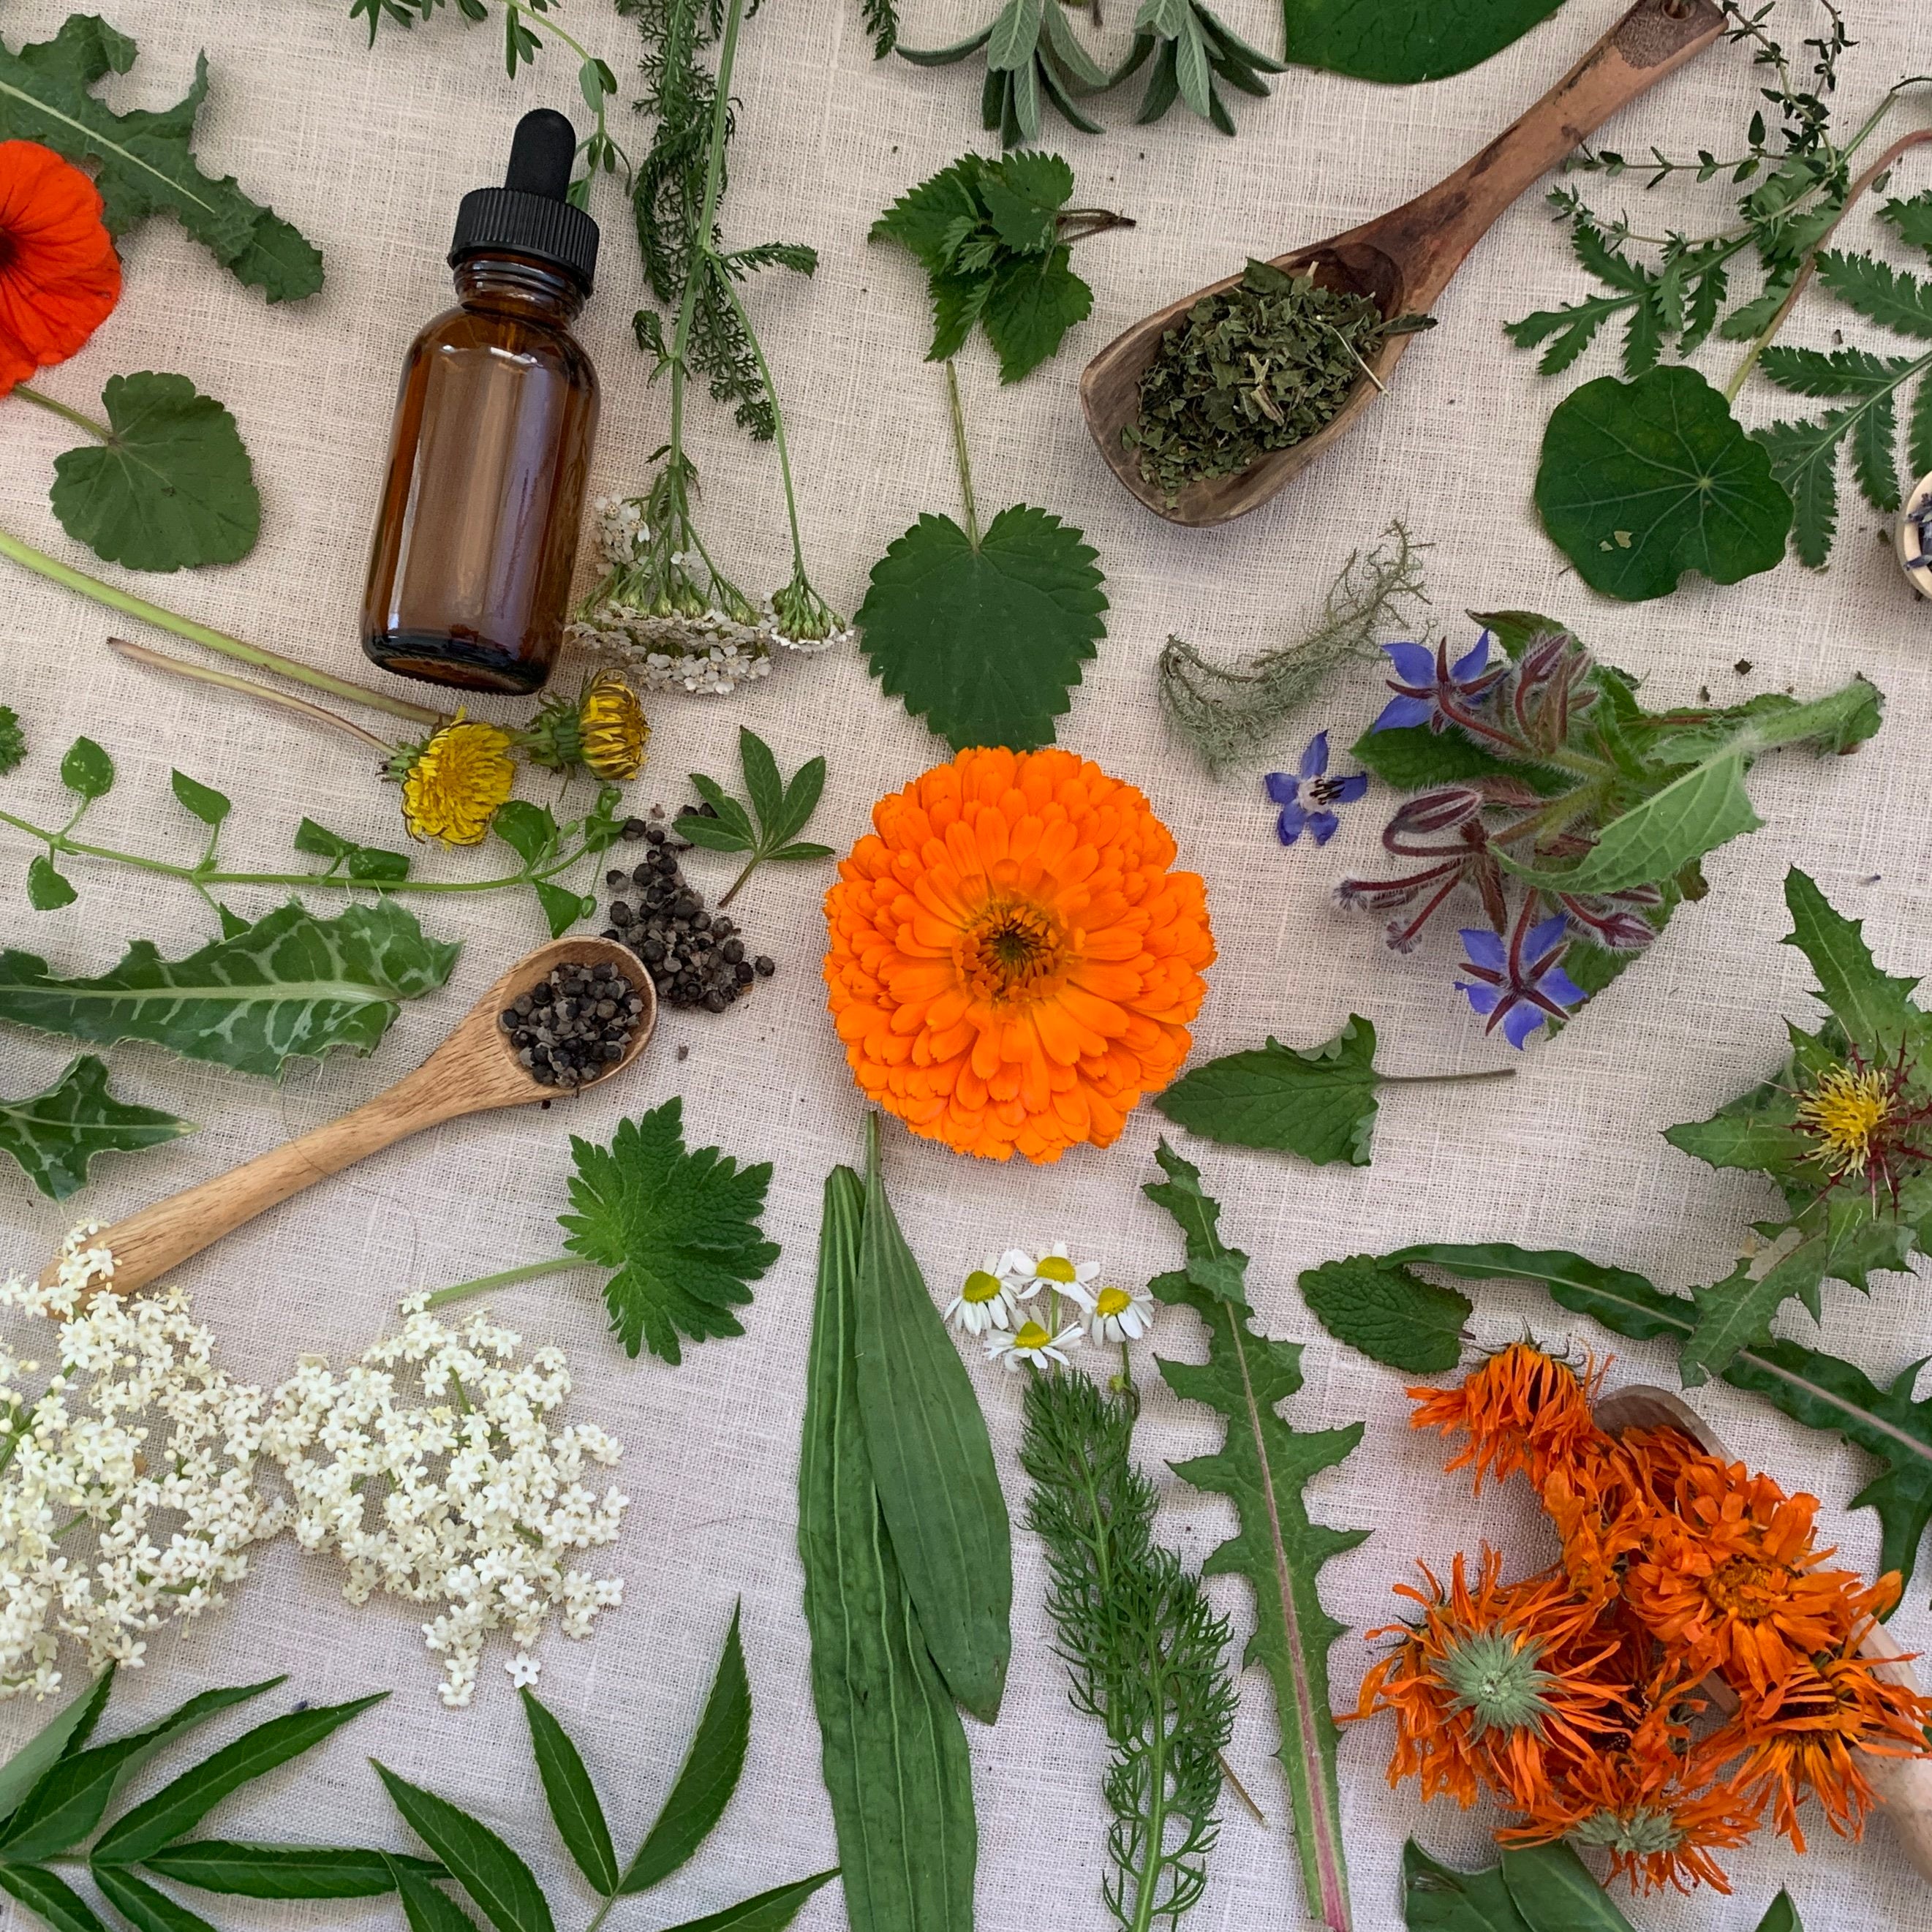 Workshop, natural health, medicinal herbs, growing medicinal herbs, using medicinal herbs, tincture, ointment, making natural remedies